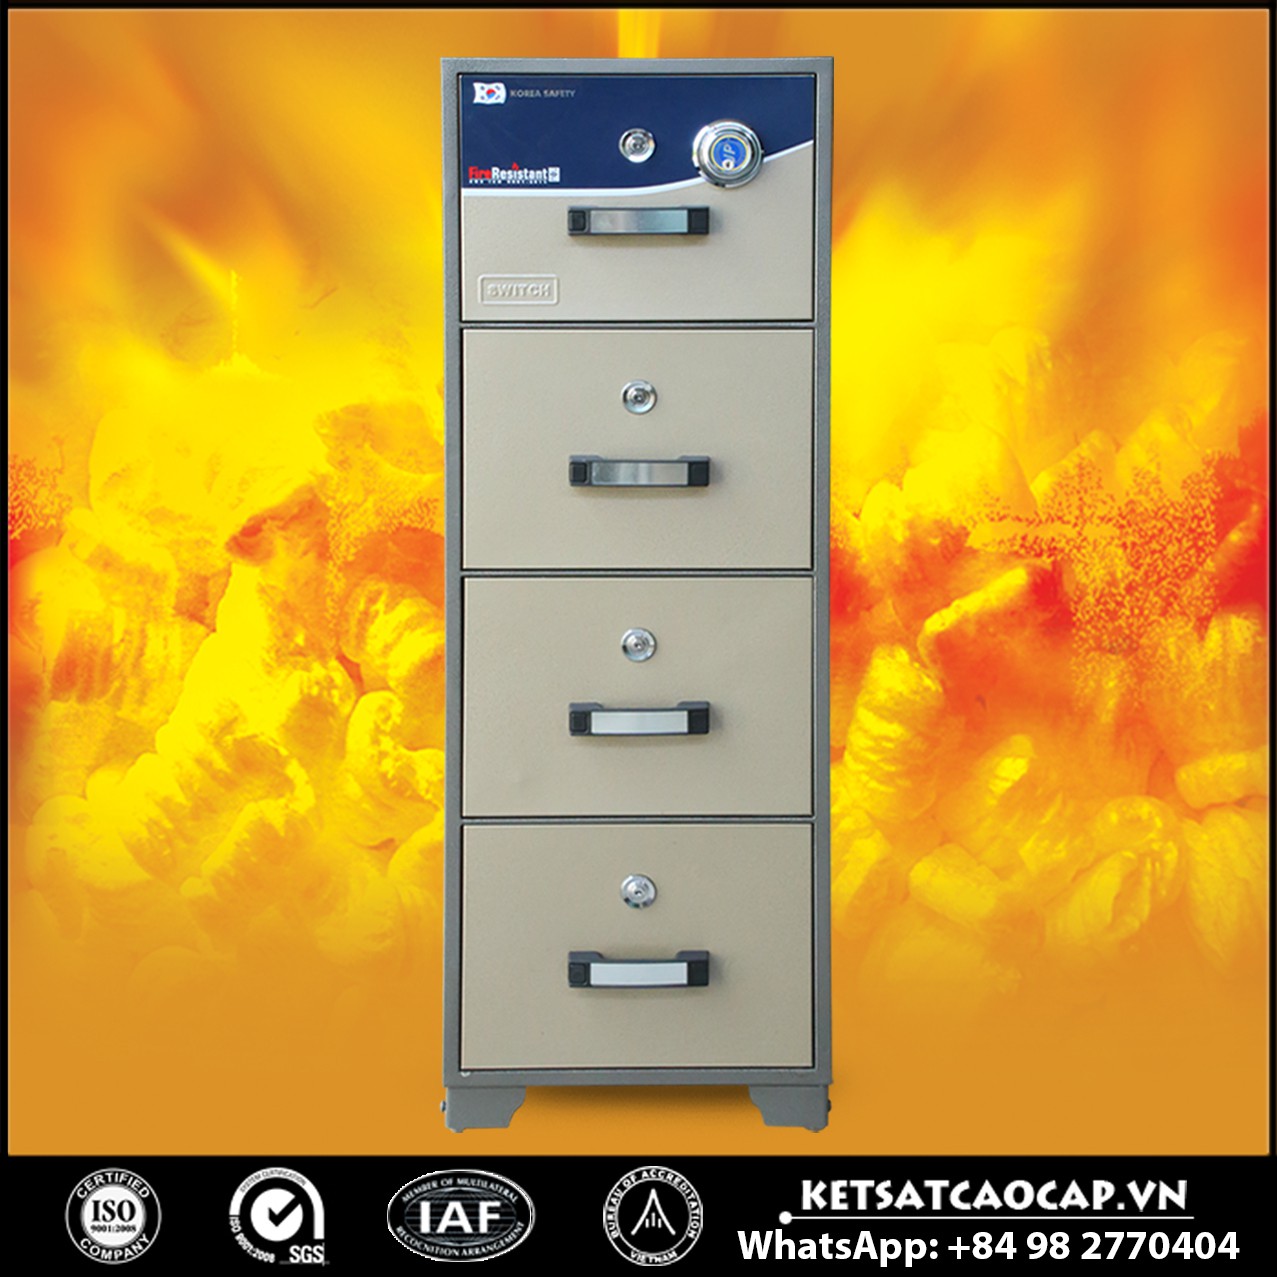 Fire Resistant File Cabinet Manufacturer